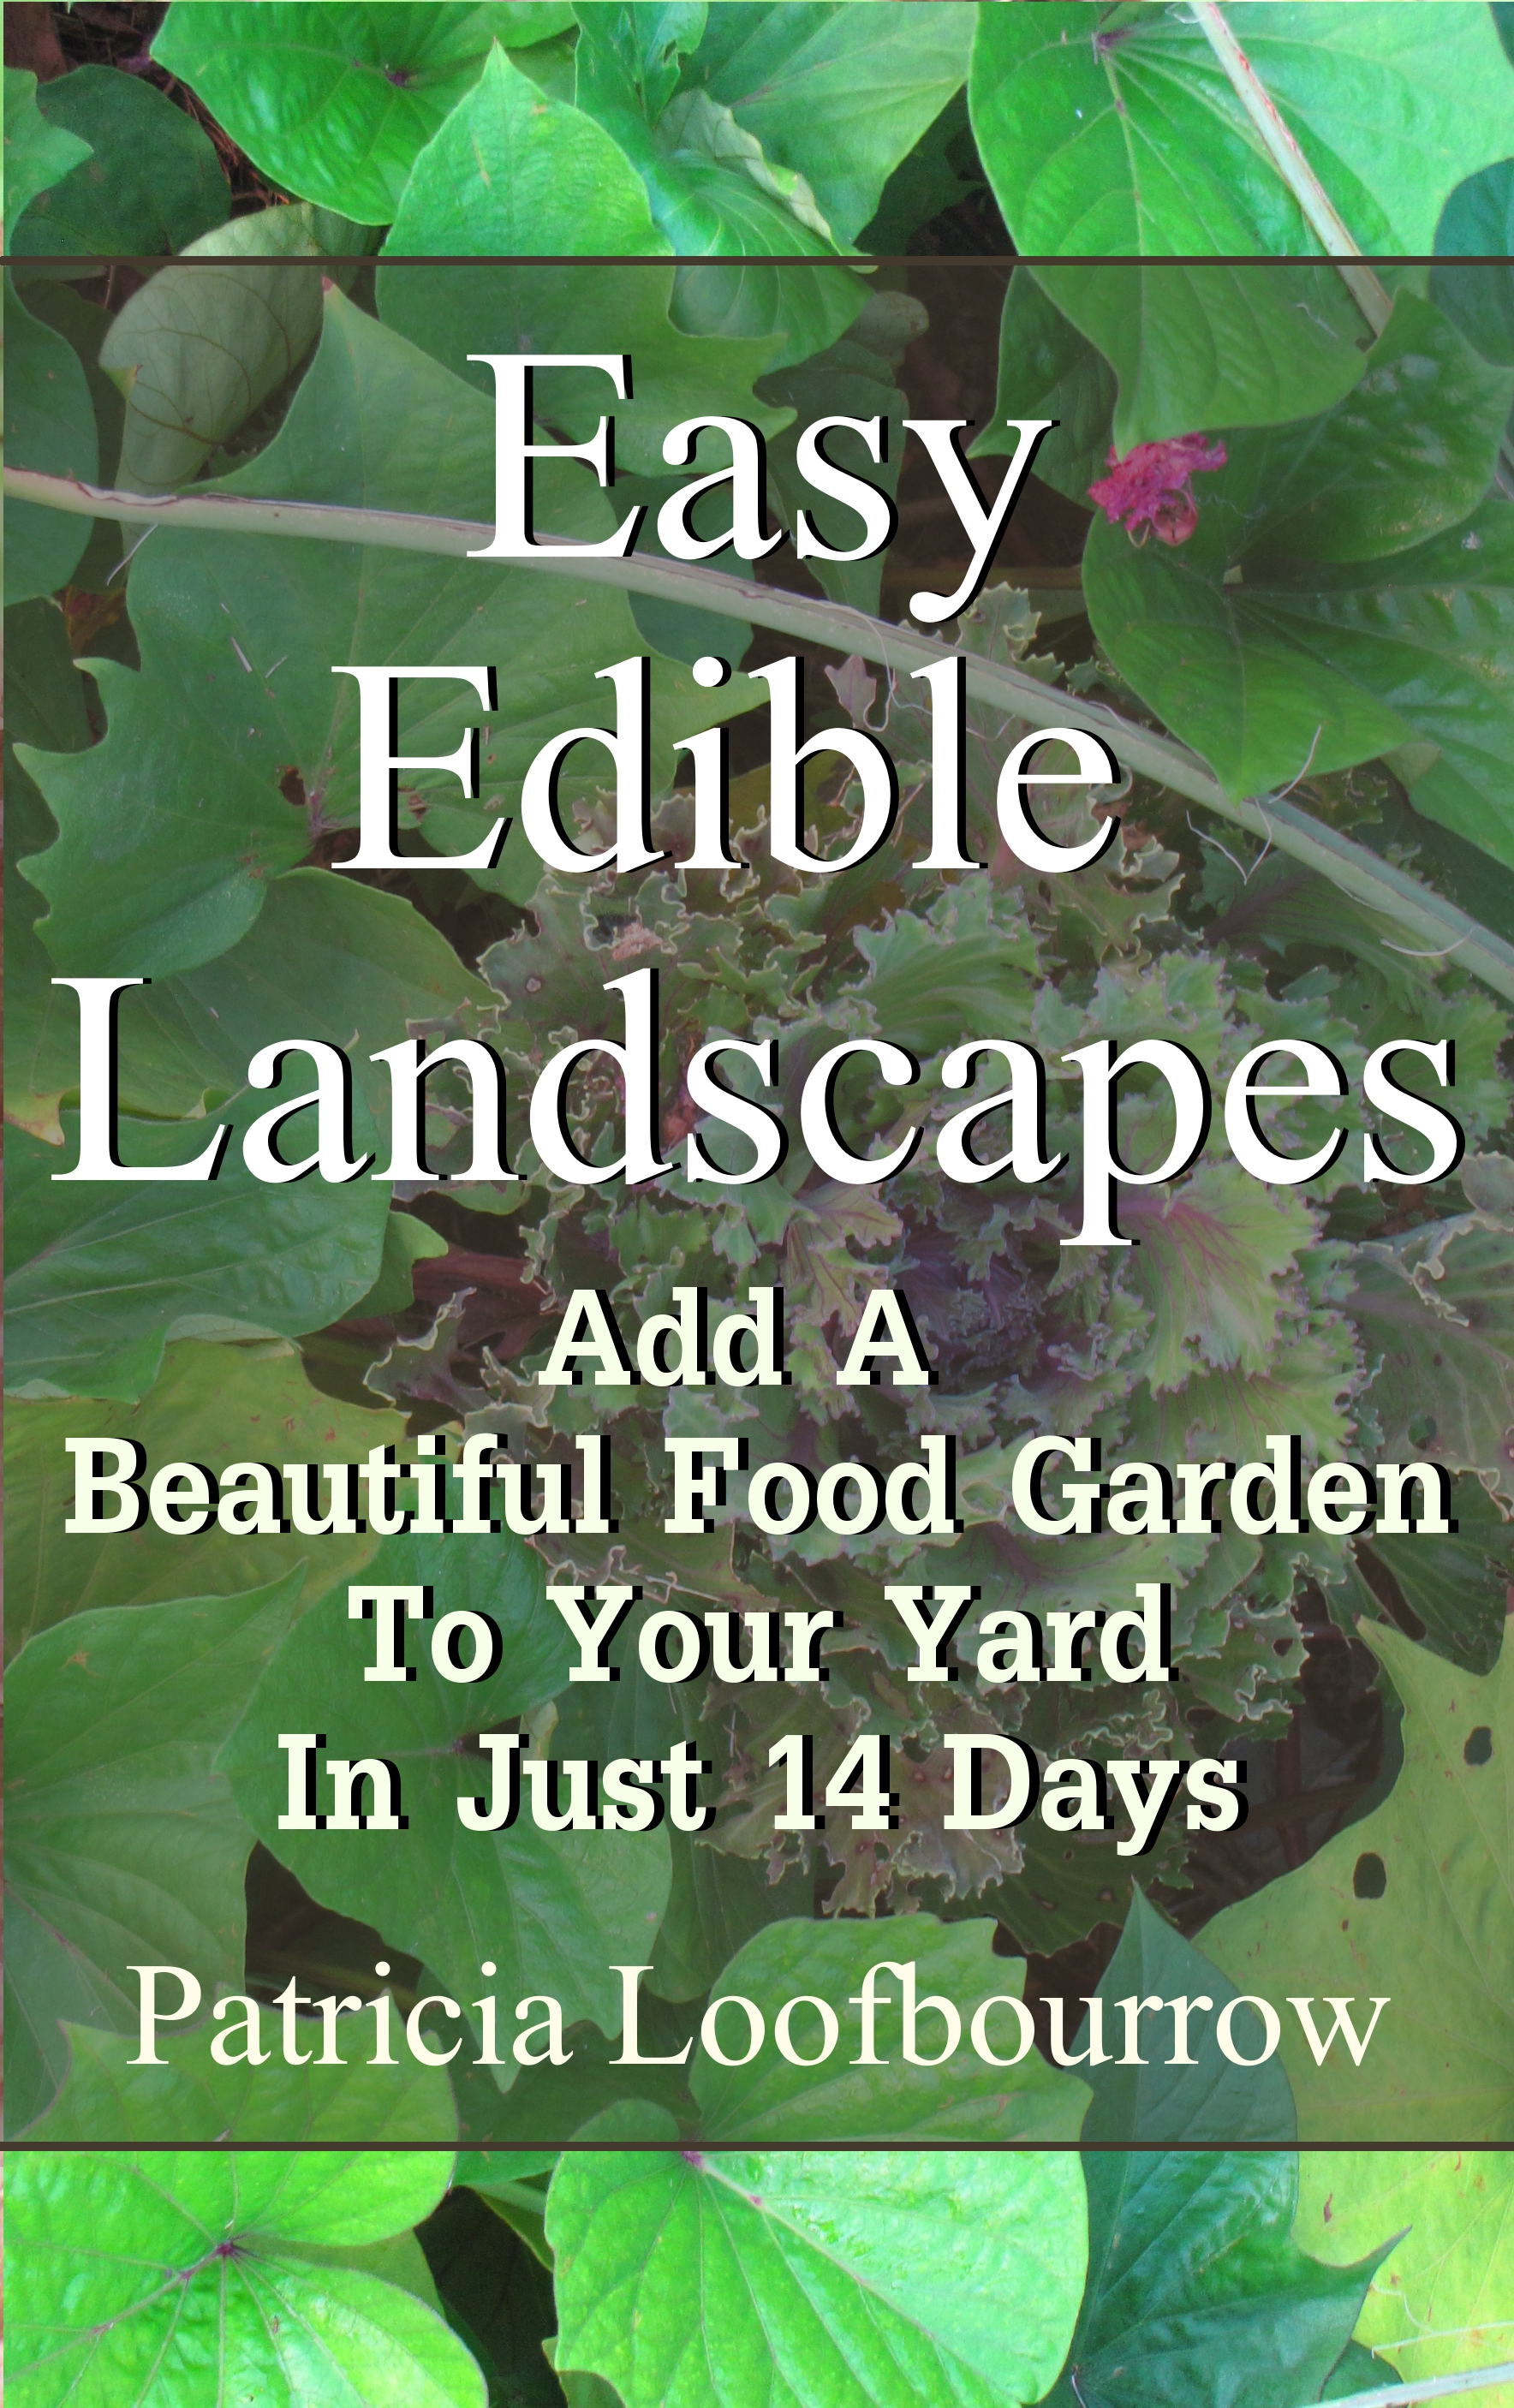 Easy Edible Landscapes